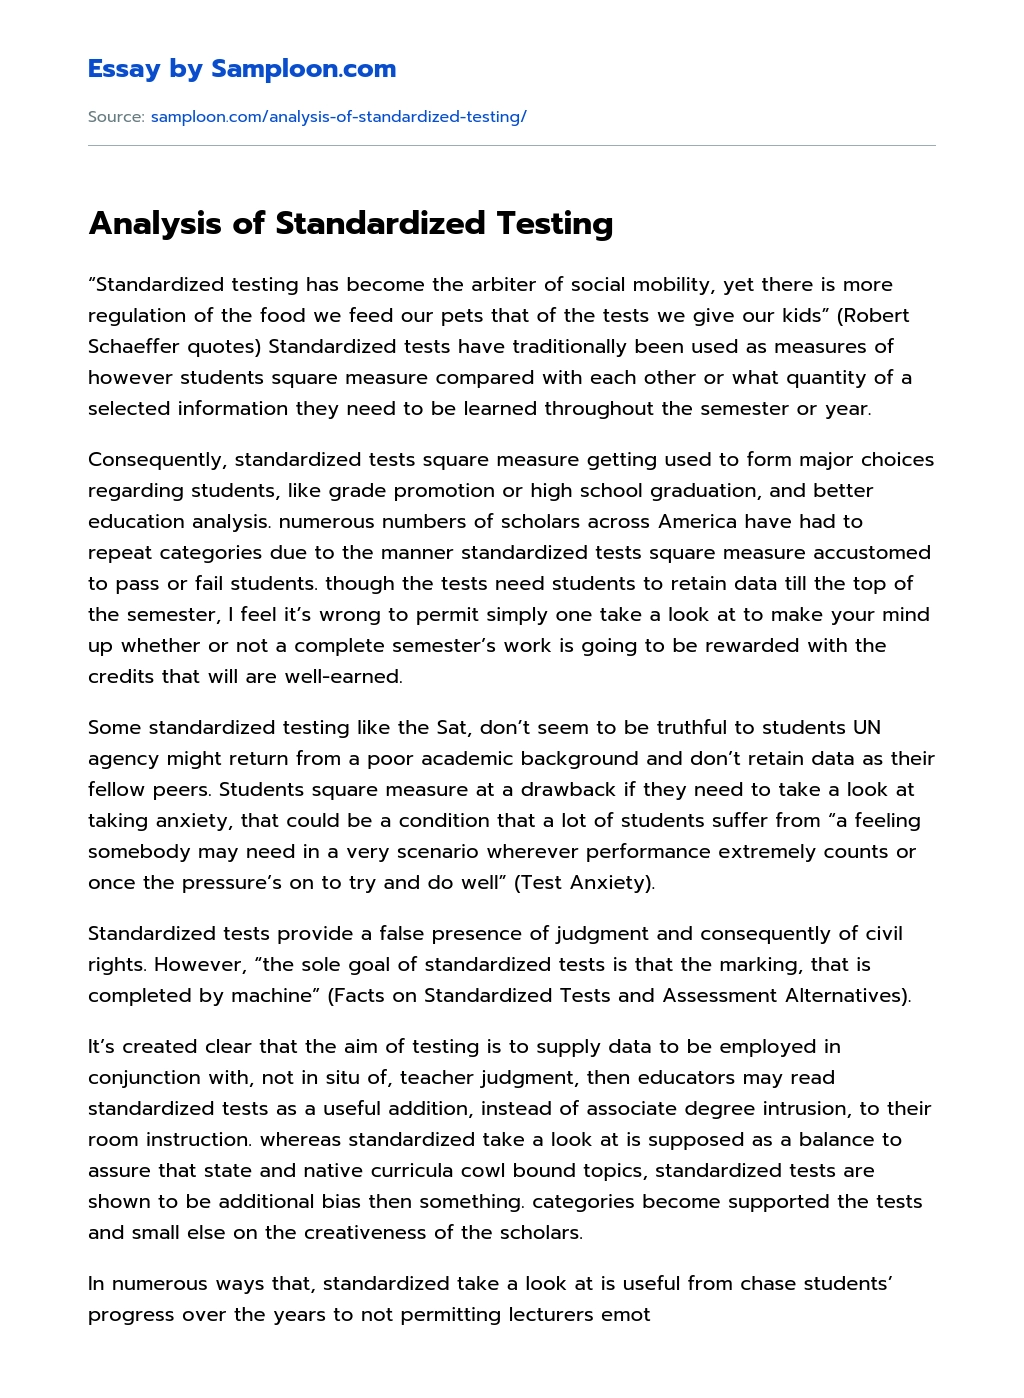 Analysis of Standardized Testing essay